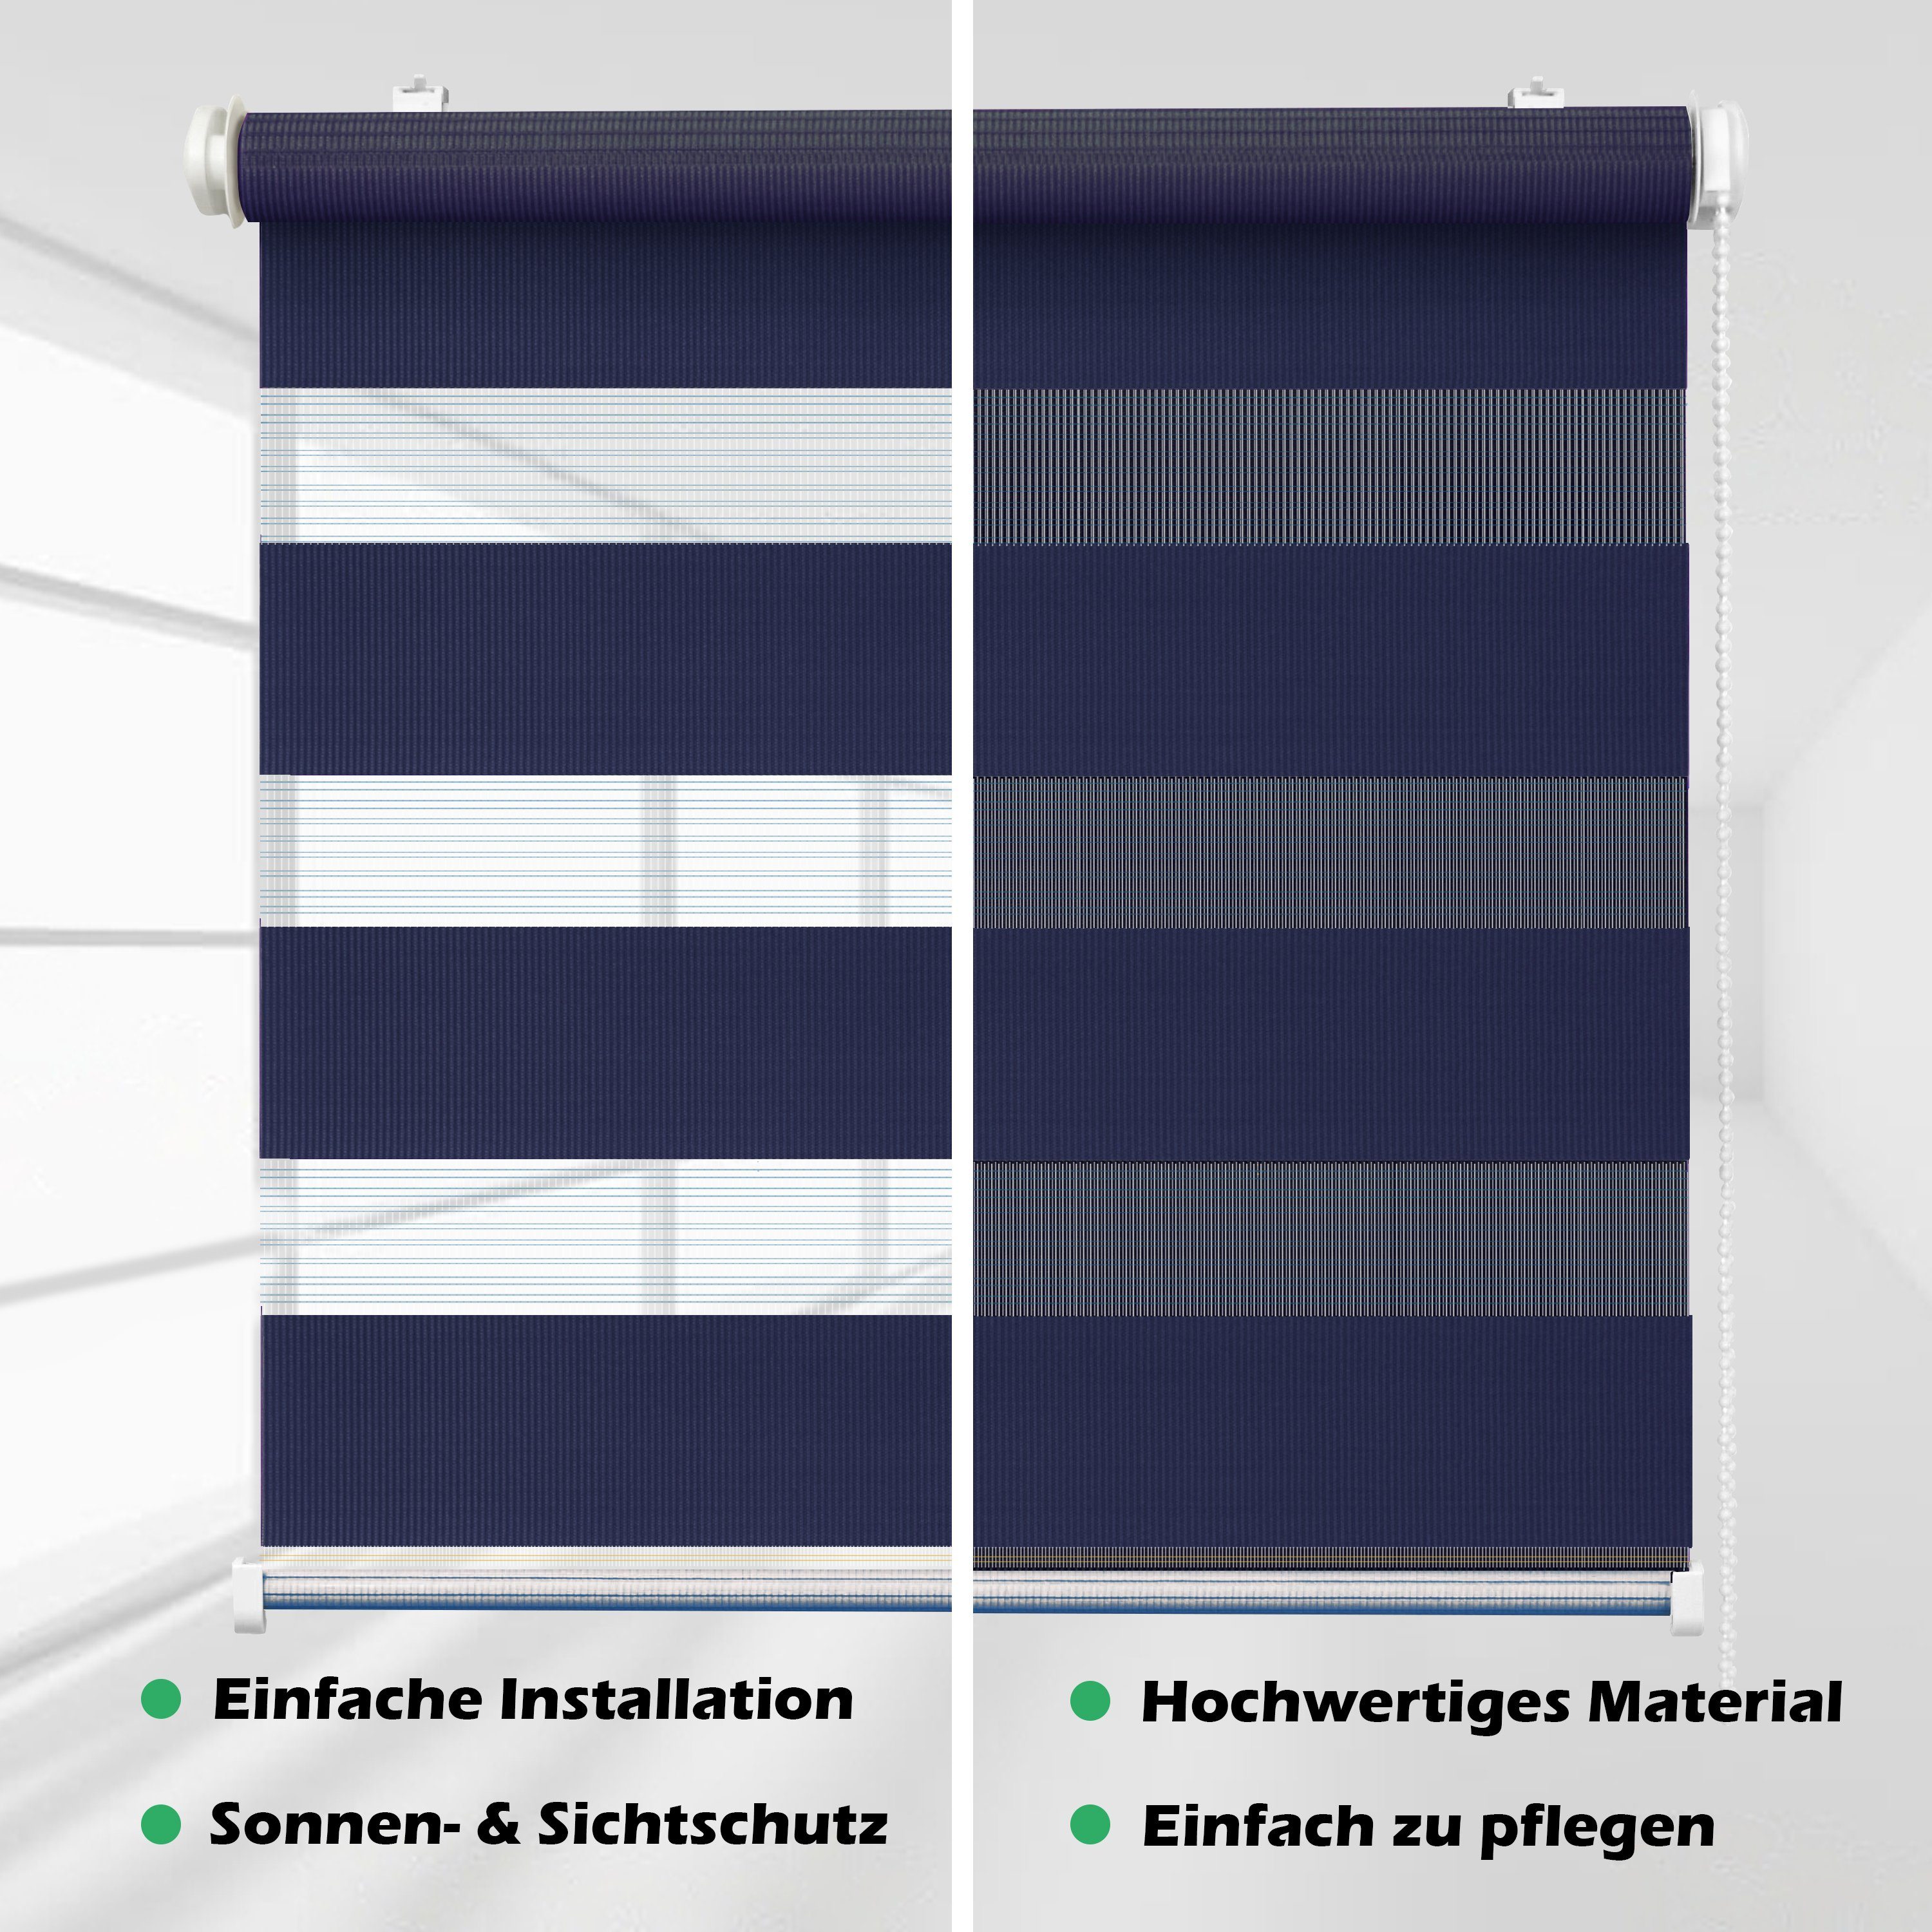 Doppelrollo Doppelrollo Blau "Colour" Klemm Klemm- mit Schraubmontage Fix DomDeco, oder Fenster-Roll, Klemmträger, Duo-Rollo